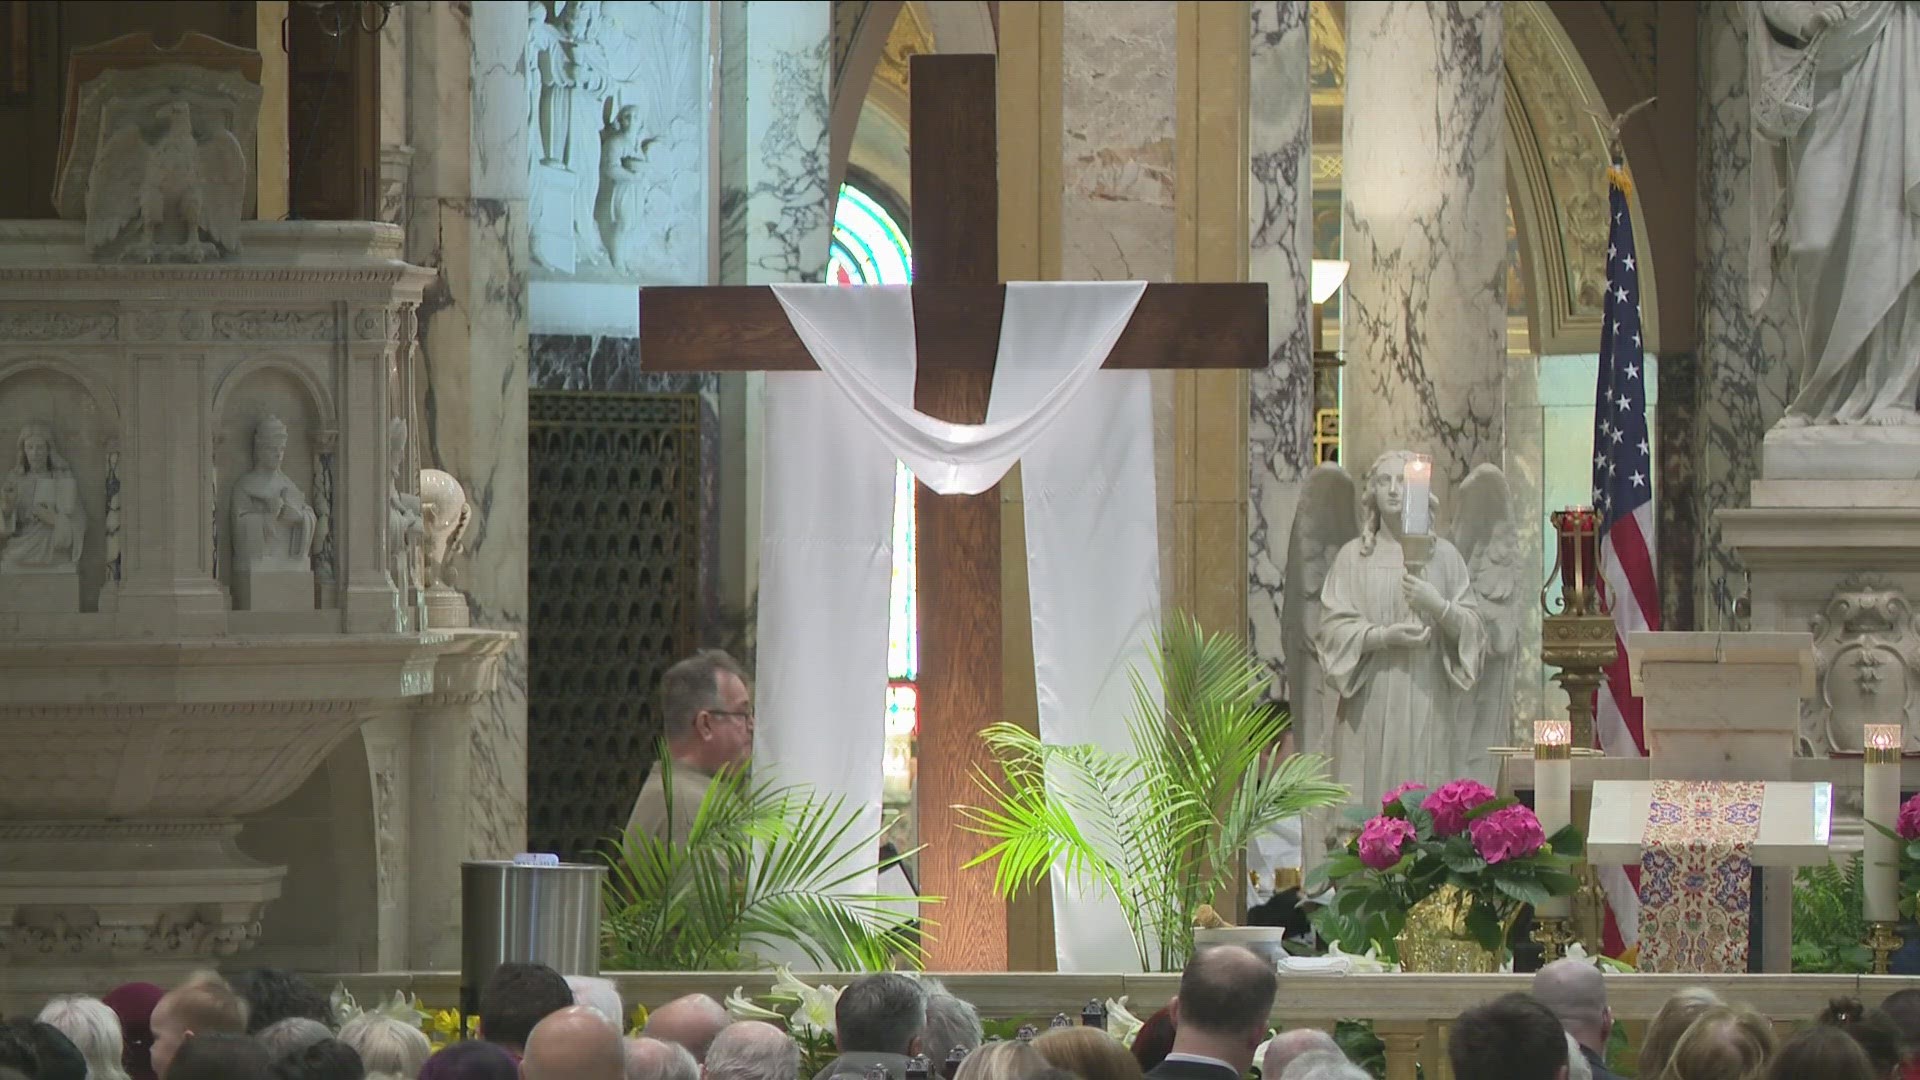 Hundreds of faithful celebrated Easter Mass at OLV national shrine and basilica in Lackawanna, on Sunday.